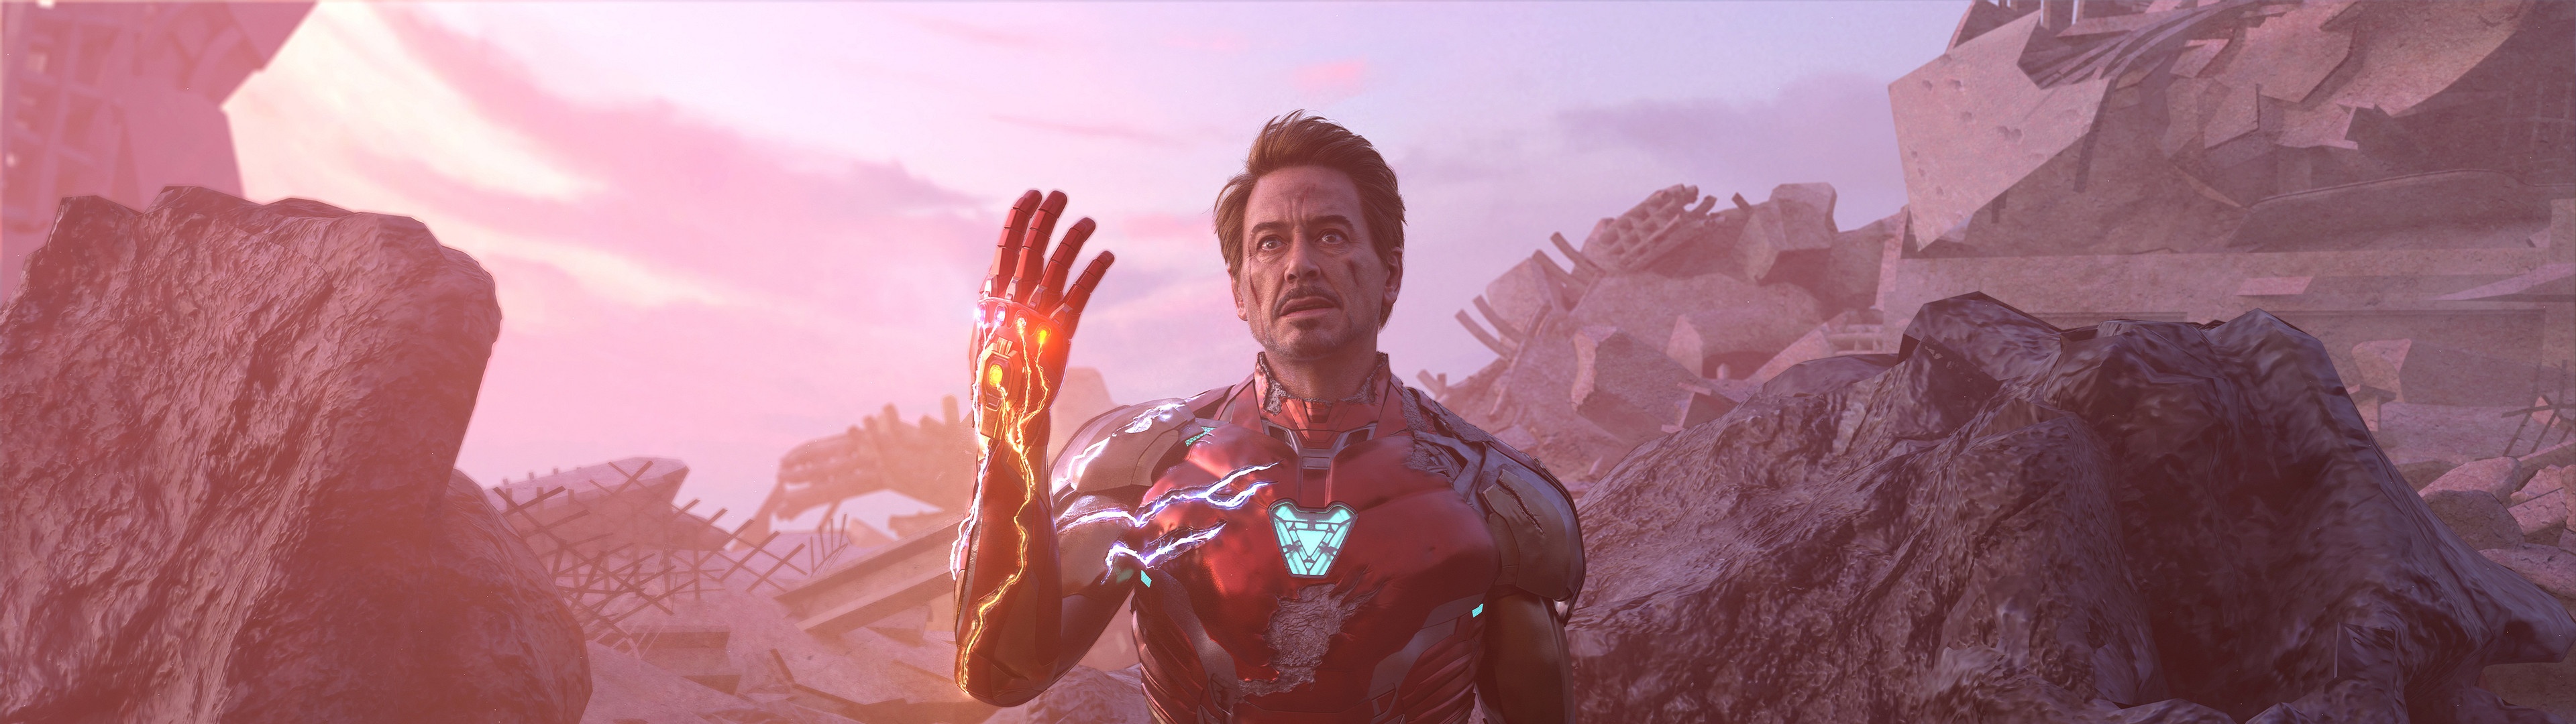 Iron Man Wallpaper 4K, Avengers: Endgame, Movies, #8523